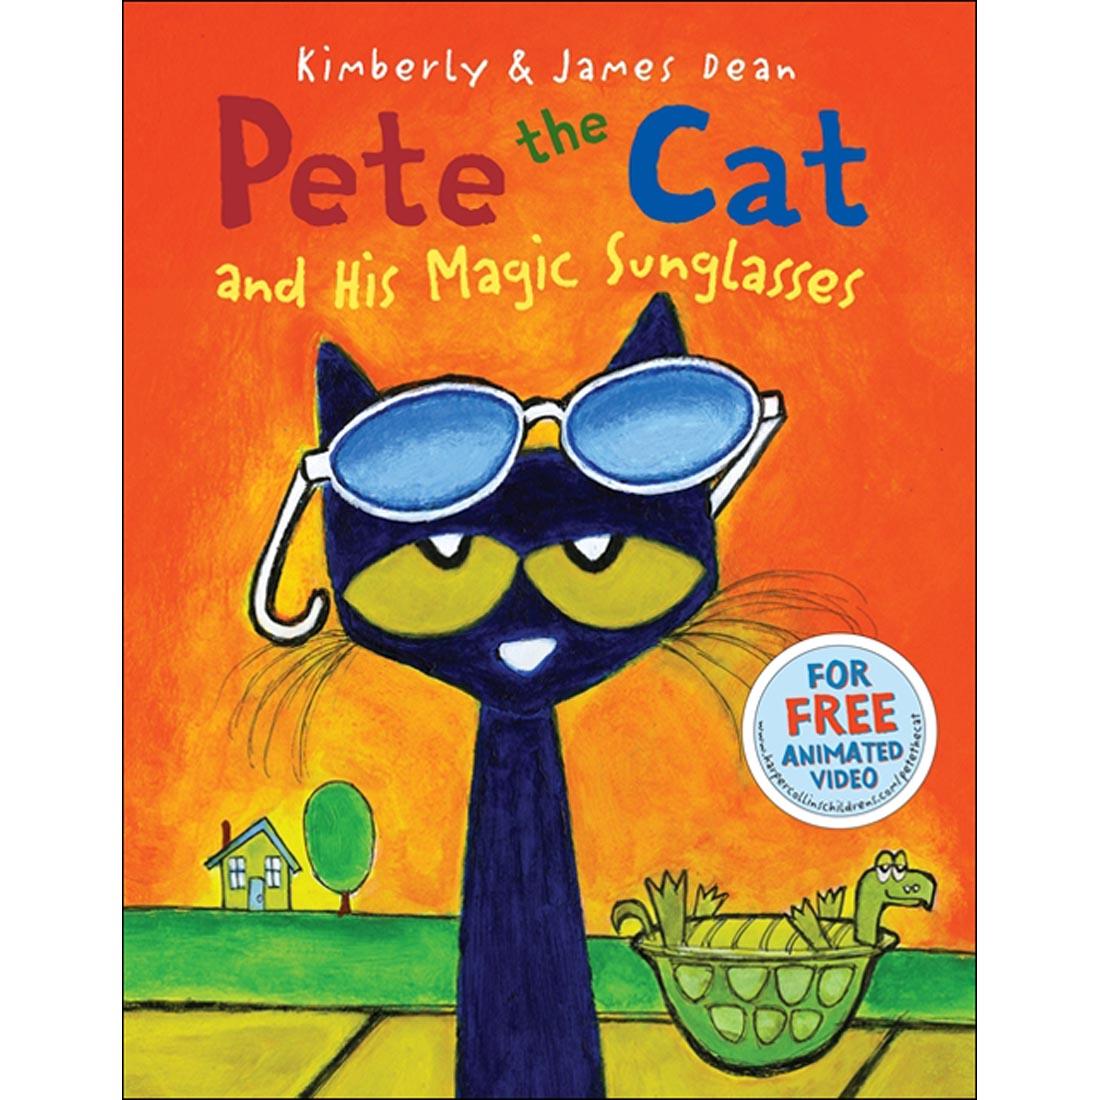 Pete The Cat and His Magic Sunglasses